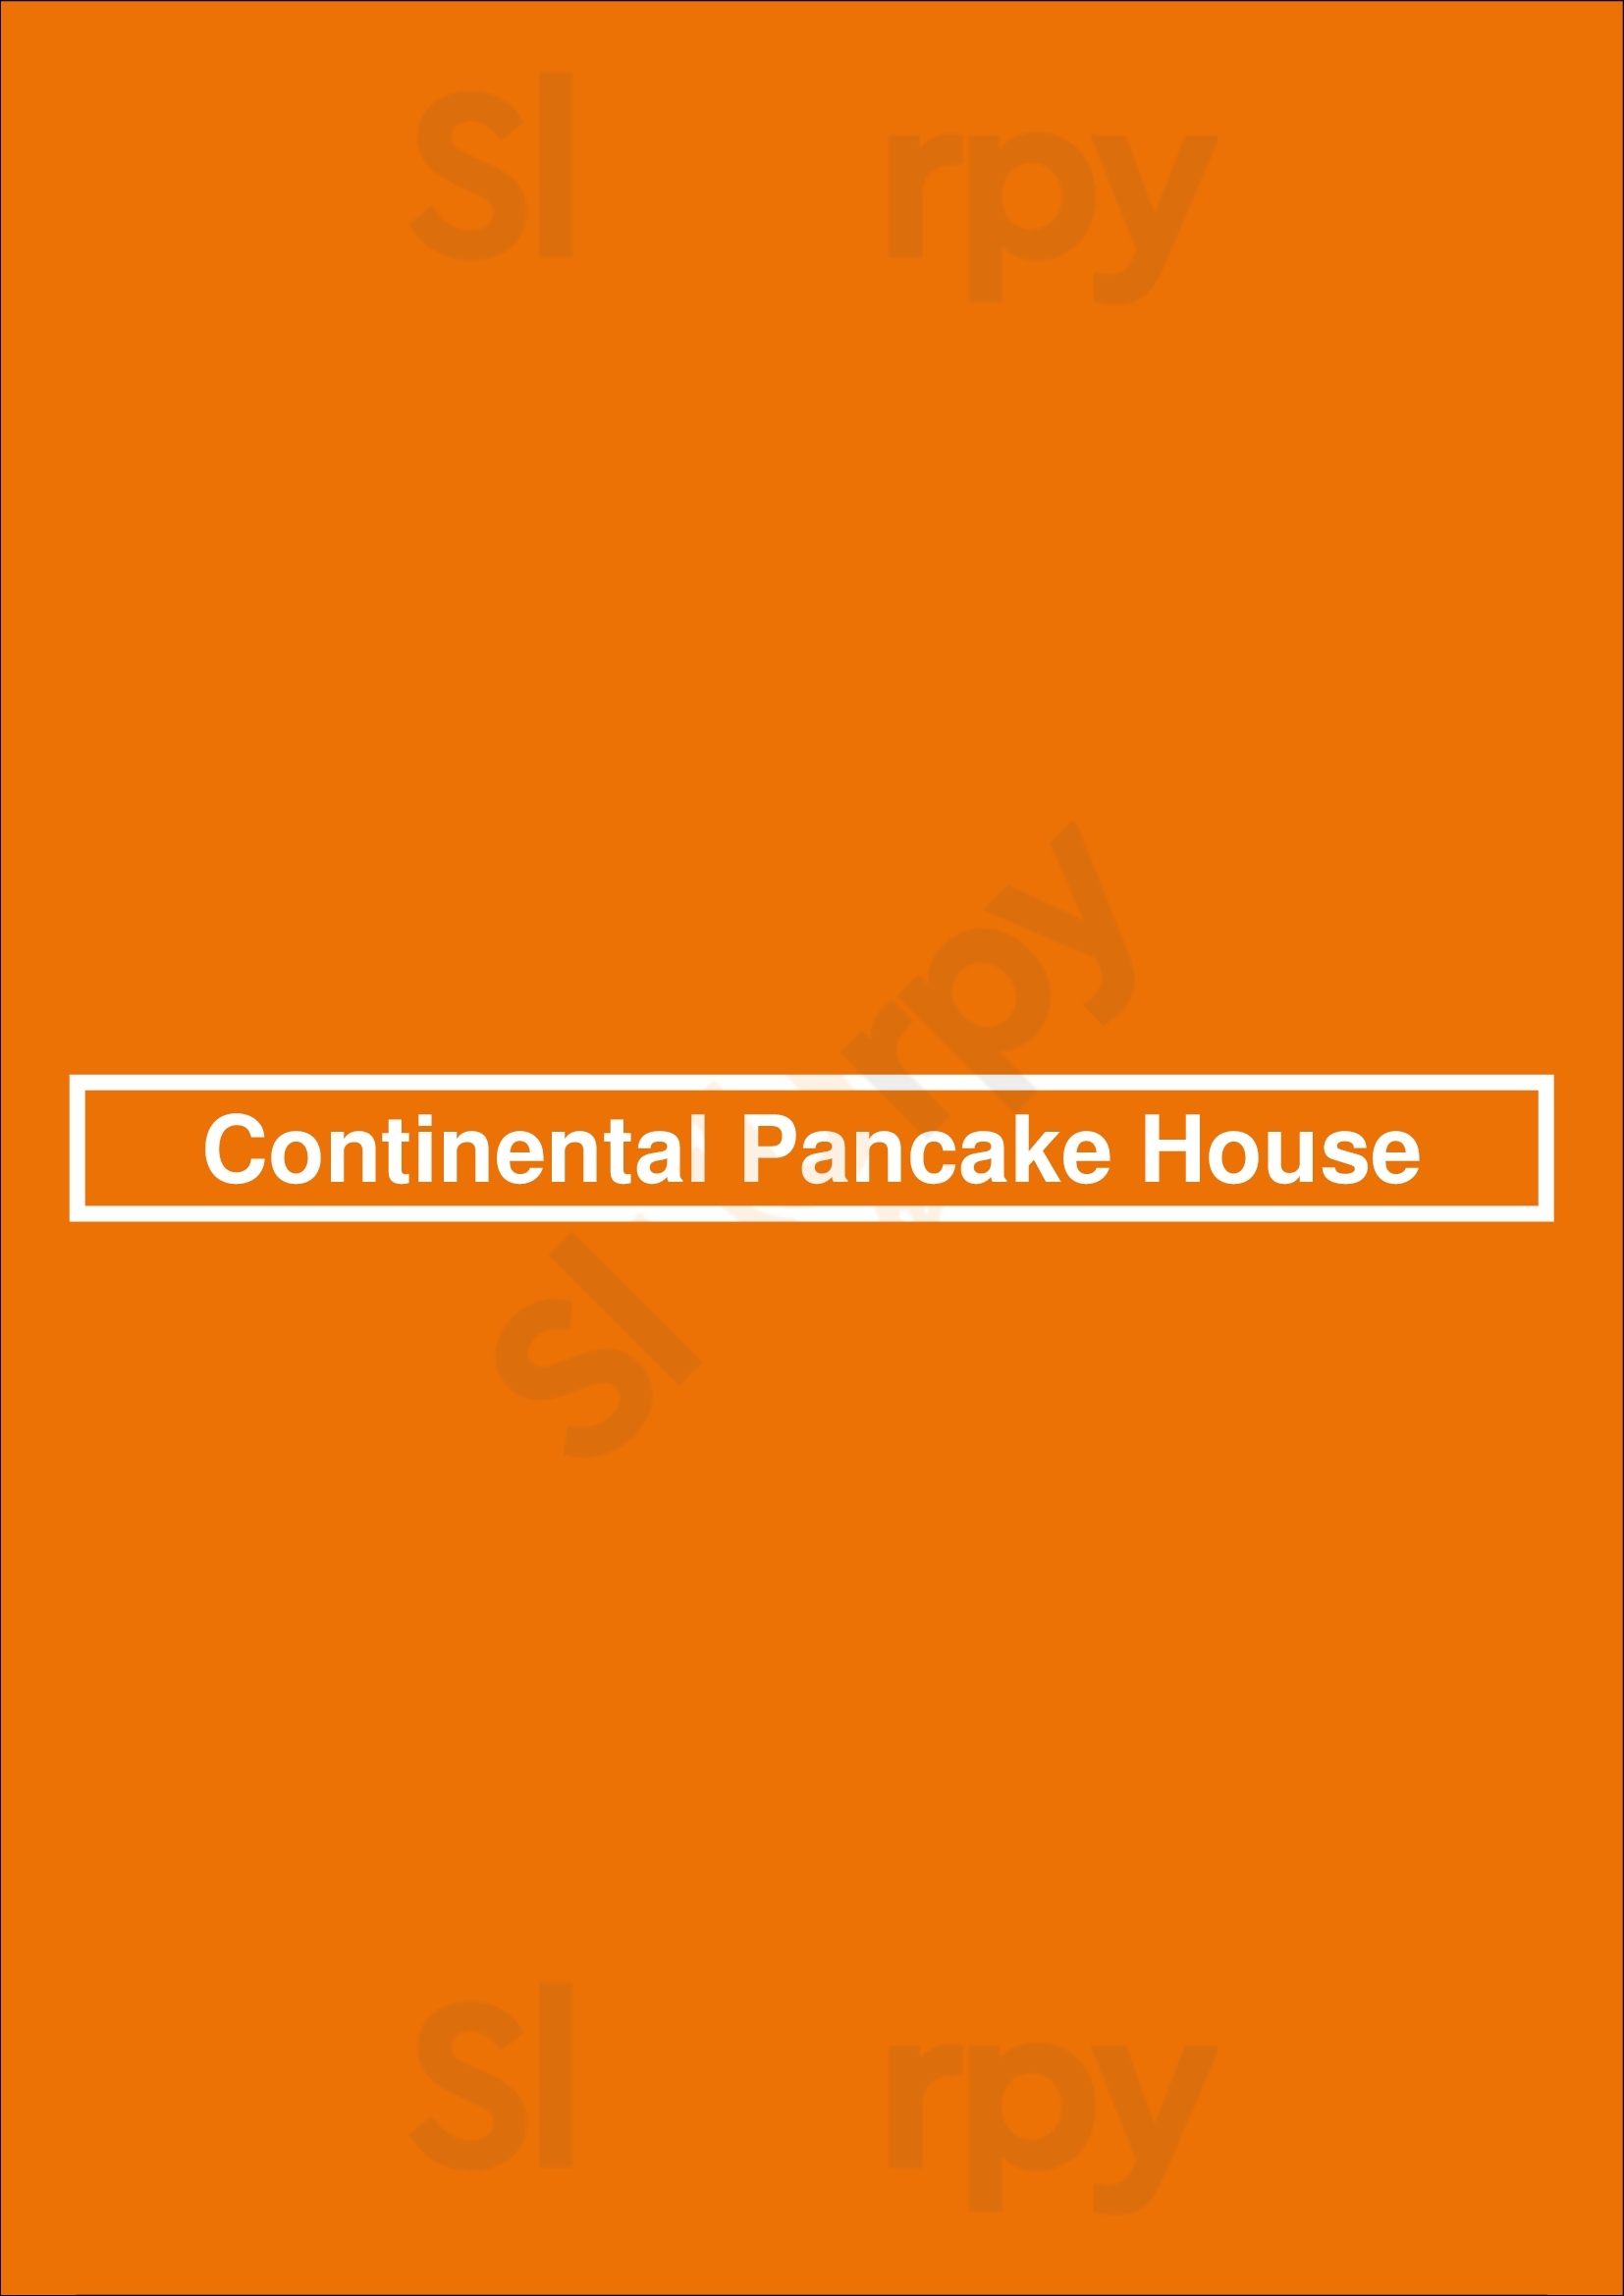 Continental Pancake House Niagara Falls Menu - 1